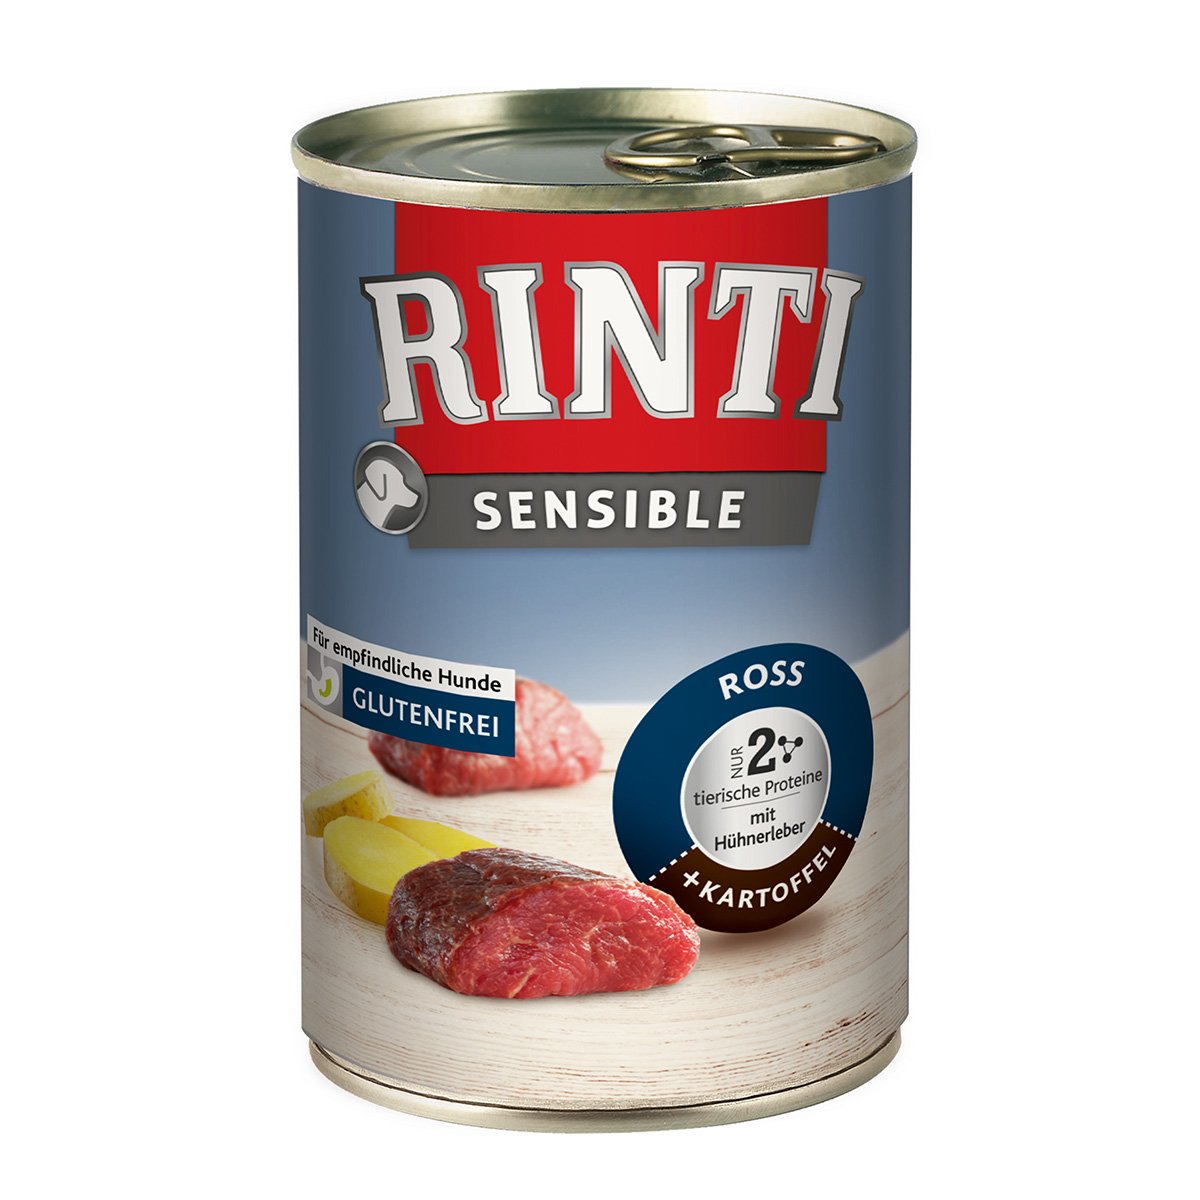 Rinti Sensible Ross & Hühnerleber & Kartoffel 12x400g